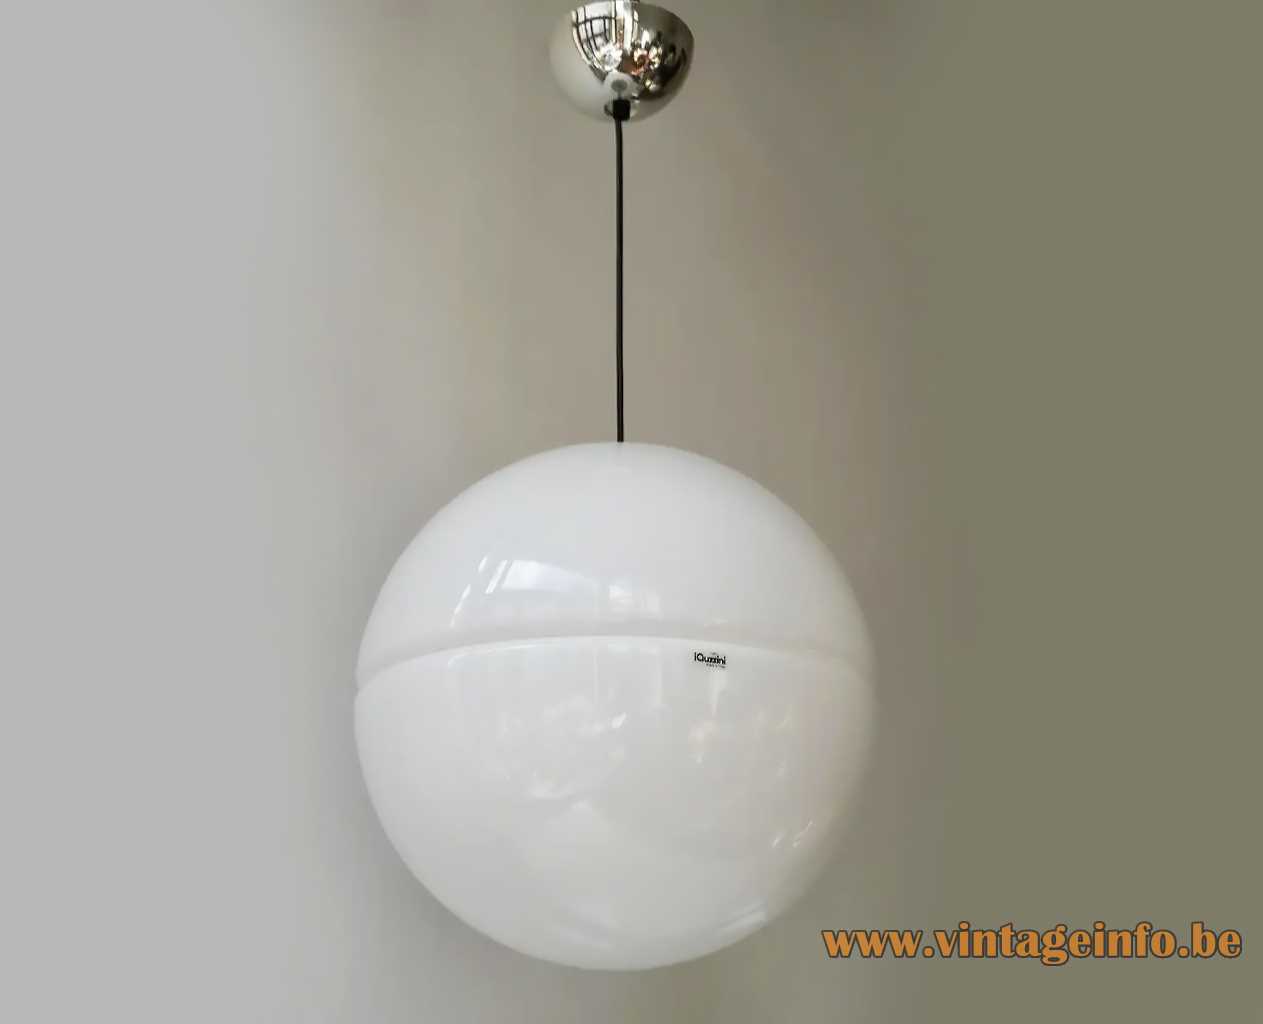 iGuzzini Sfera pendant lamp big white plastic globe lampshade 2 shells 1970s Harvey Guzzini Italy